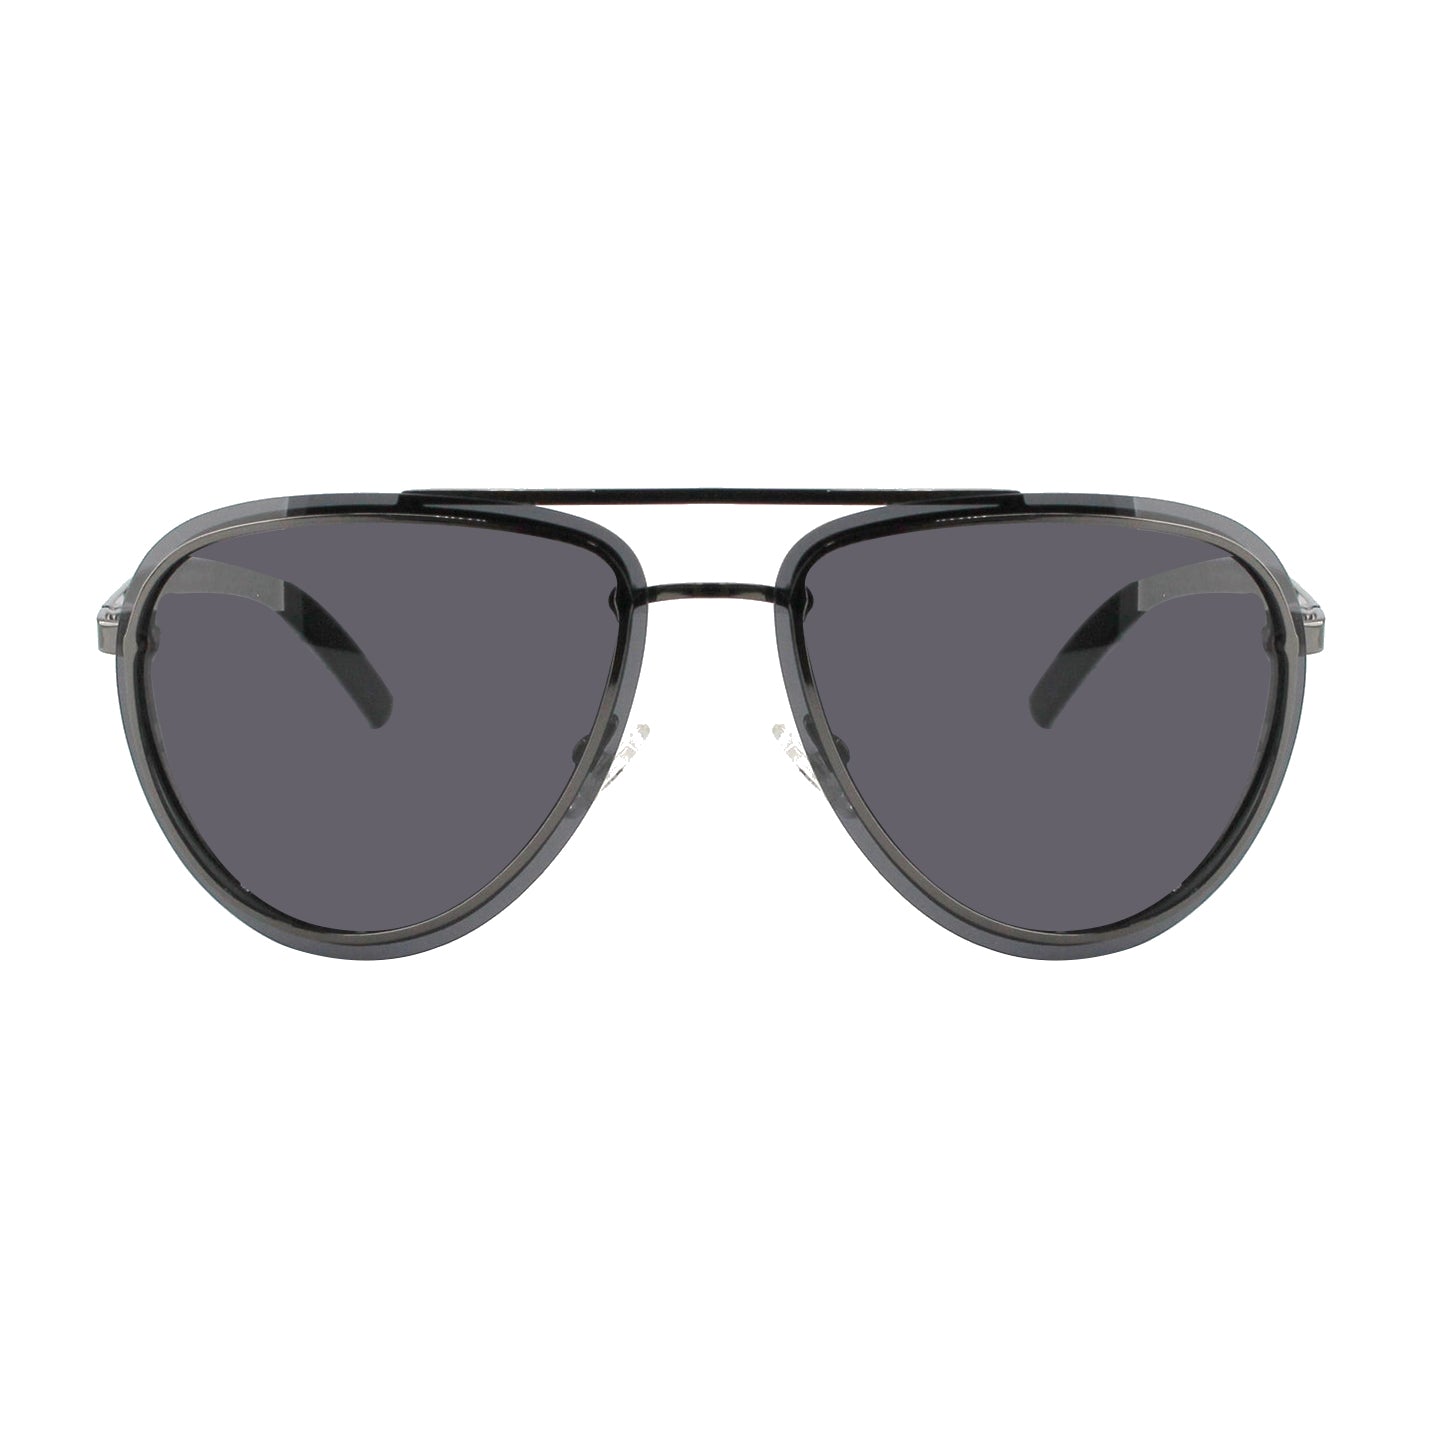 Shades X - Polarized Sunglasses | Model 1820